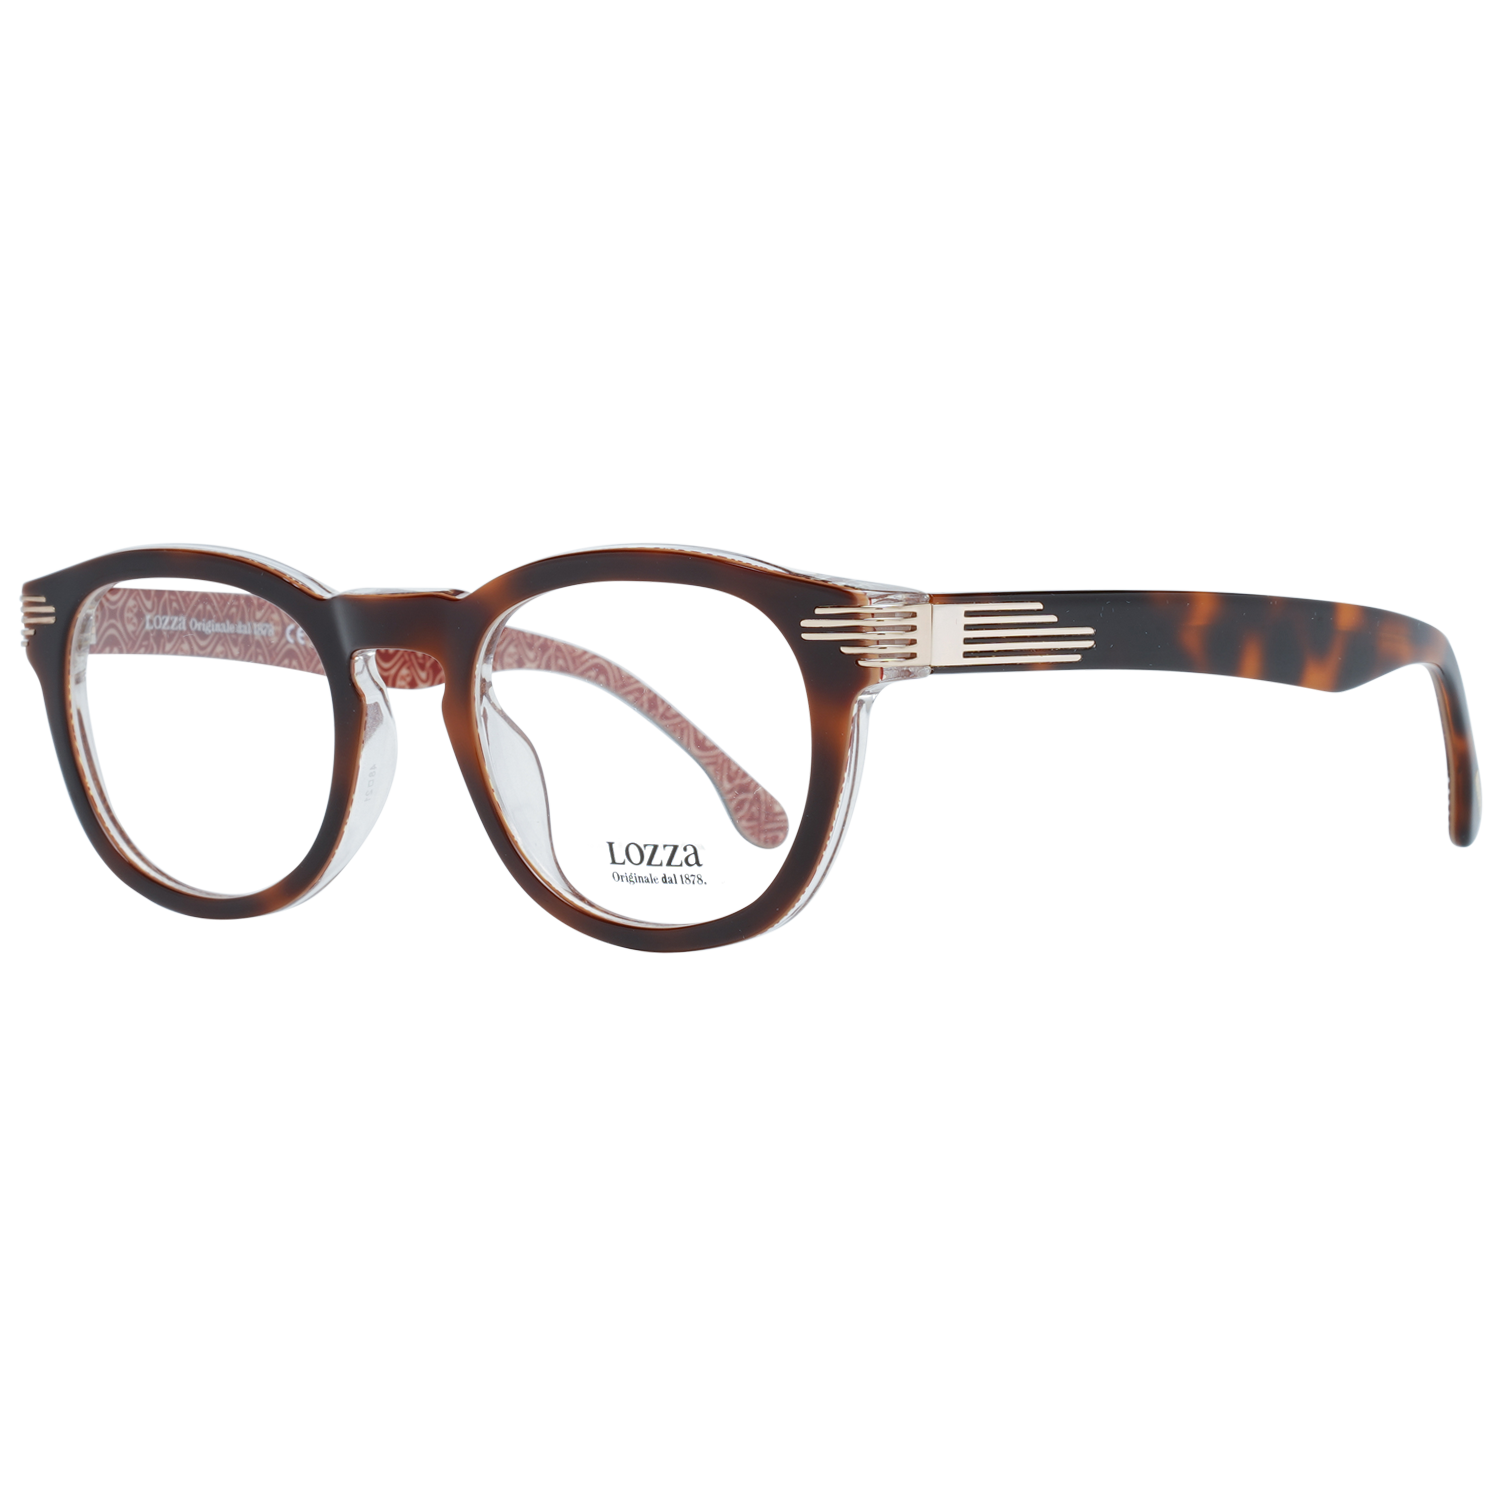 Lozza Frames Lozza Optical Frame VL4104 0GB5 48 Eyeglasses Eyewear UK USA Australia 